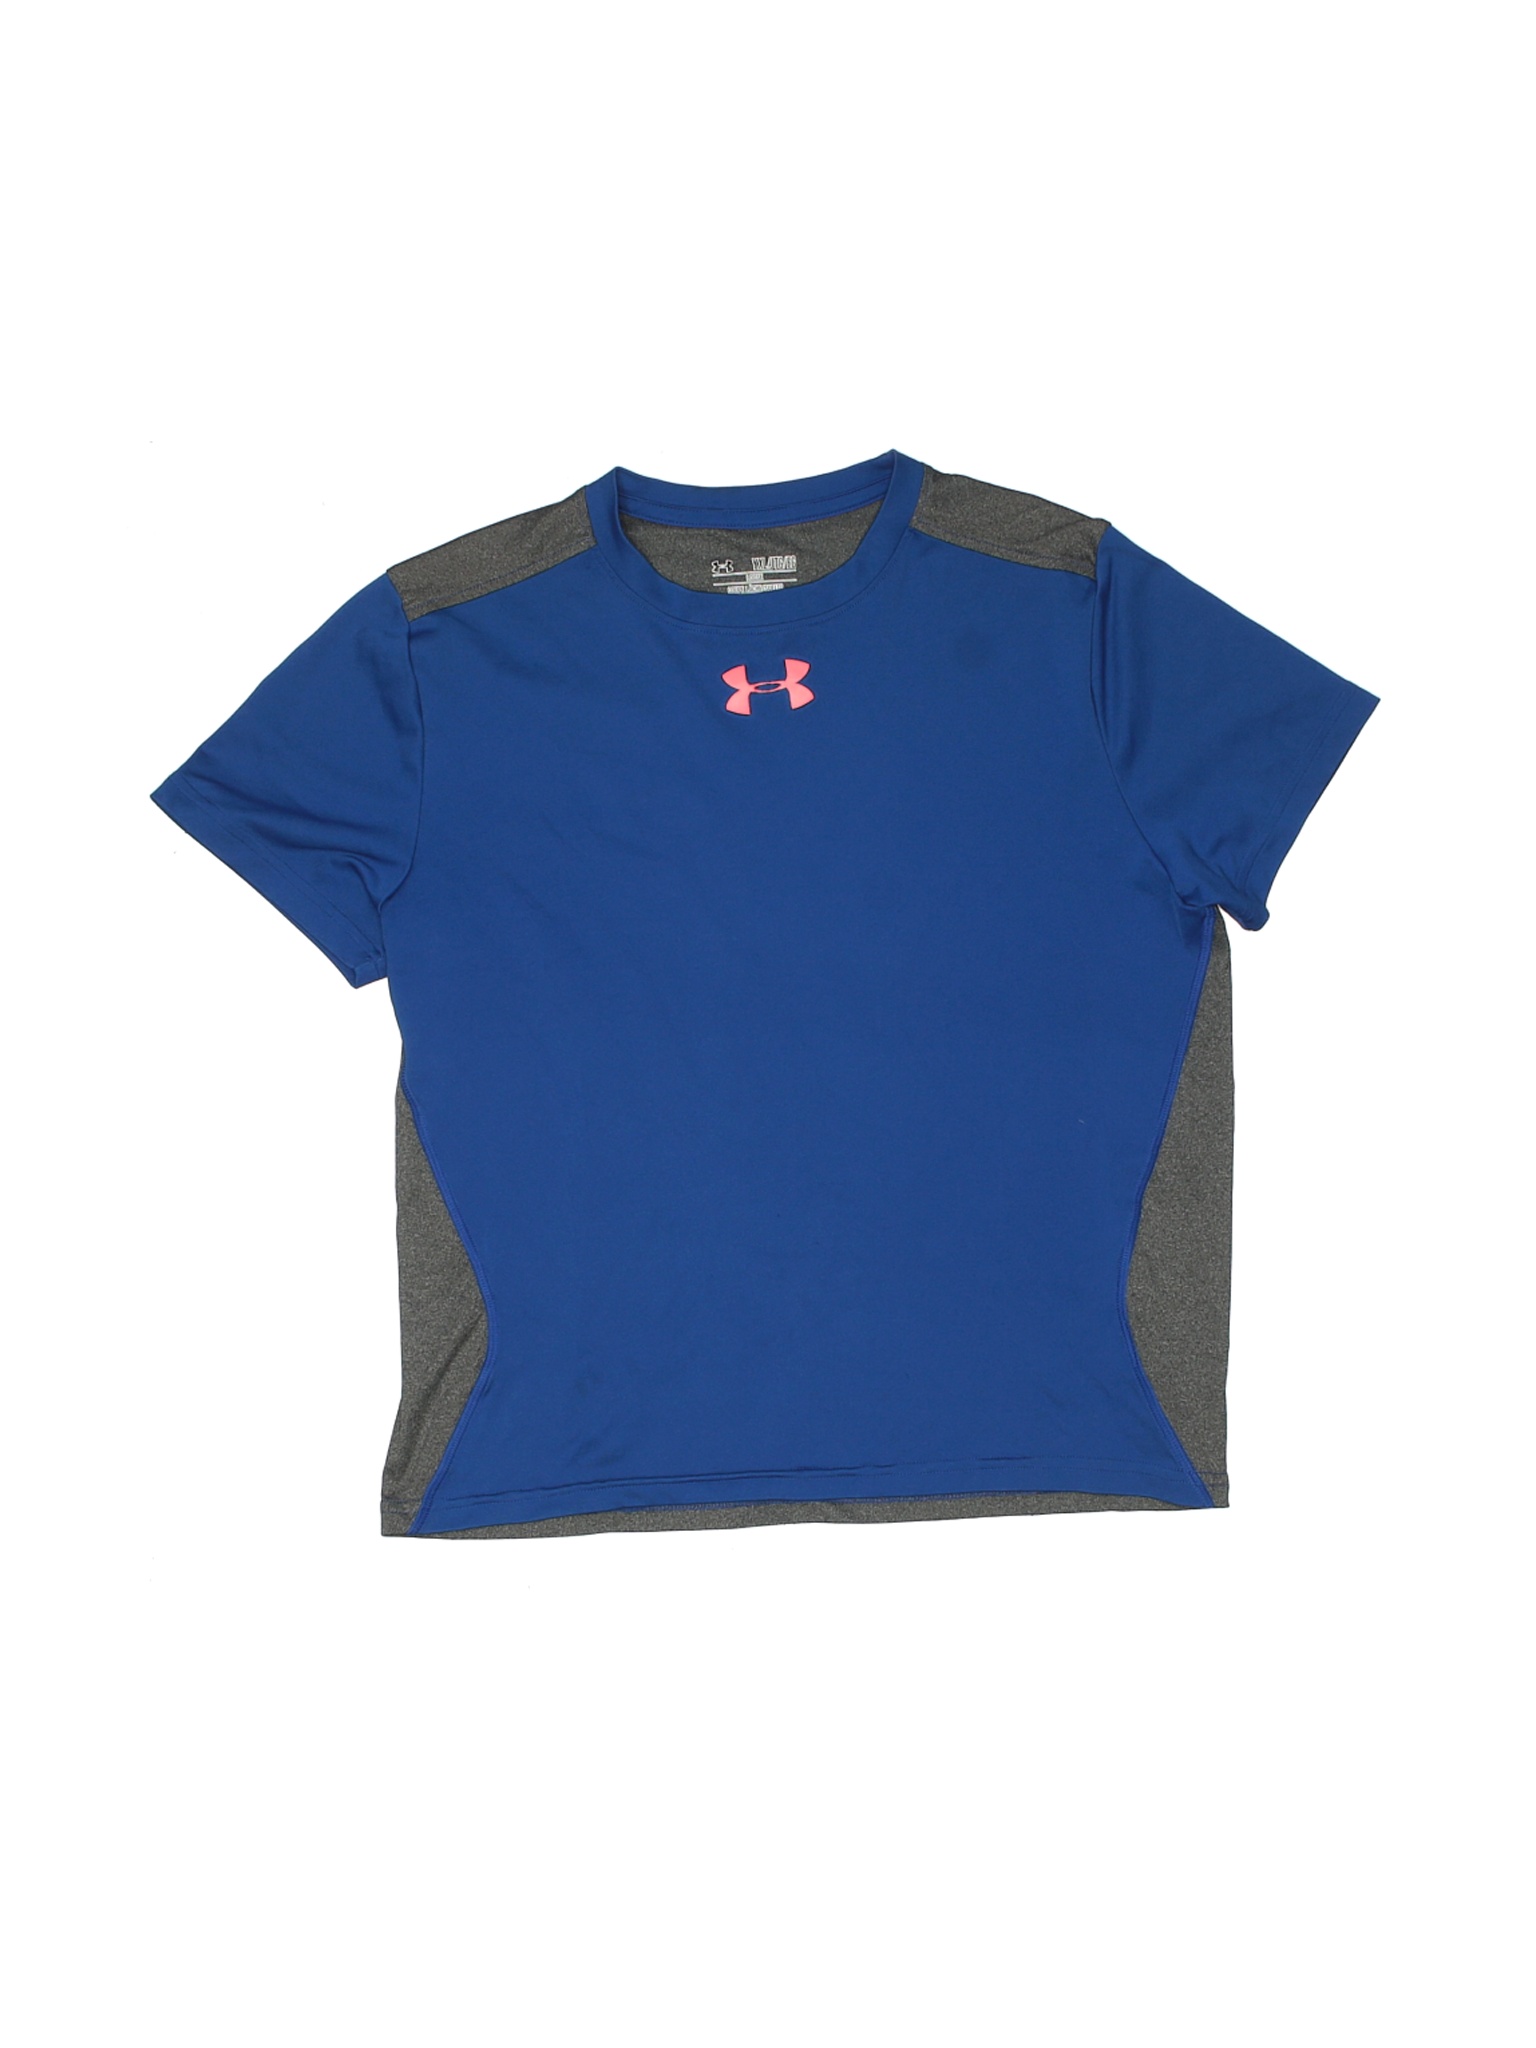 Heat Gear by Under Armour Boys Blue Active T-Shirt XL Youth | eBay